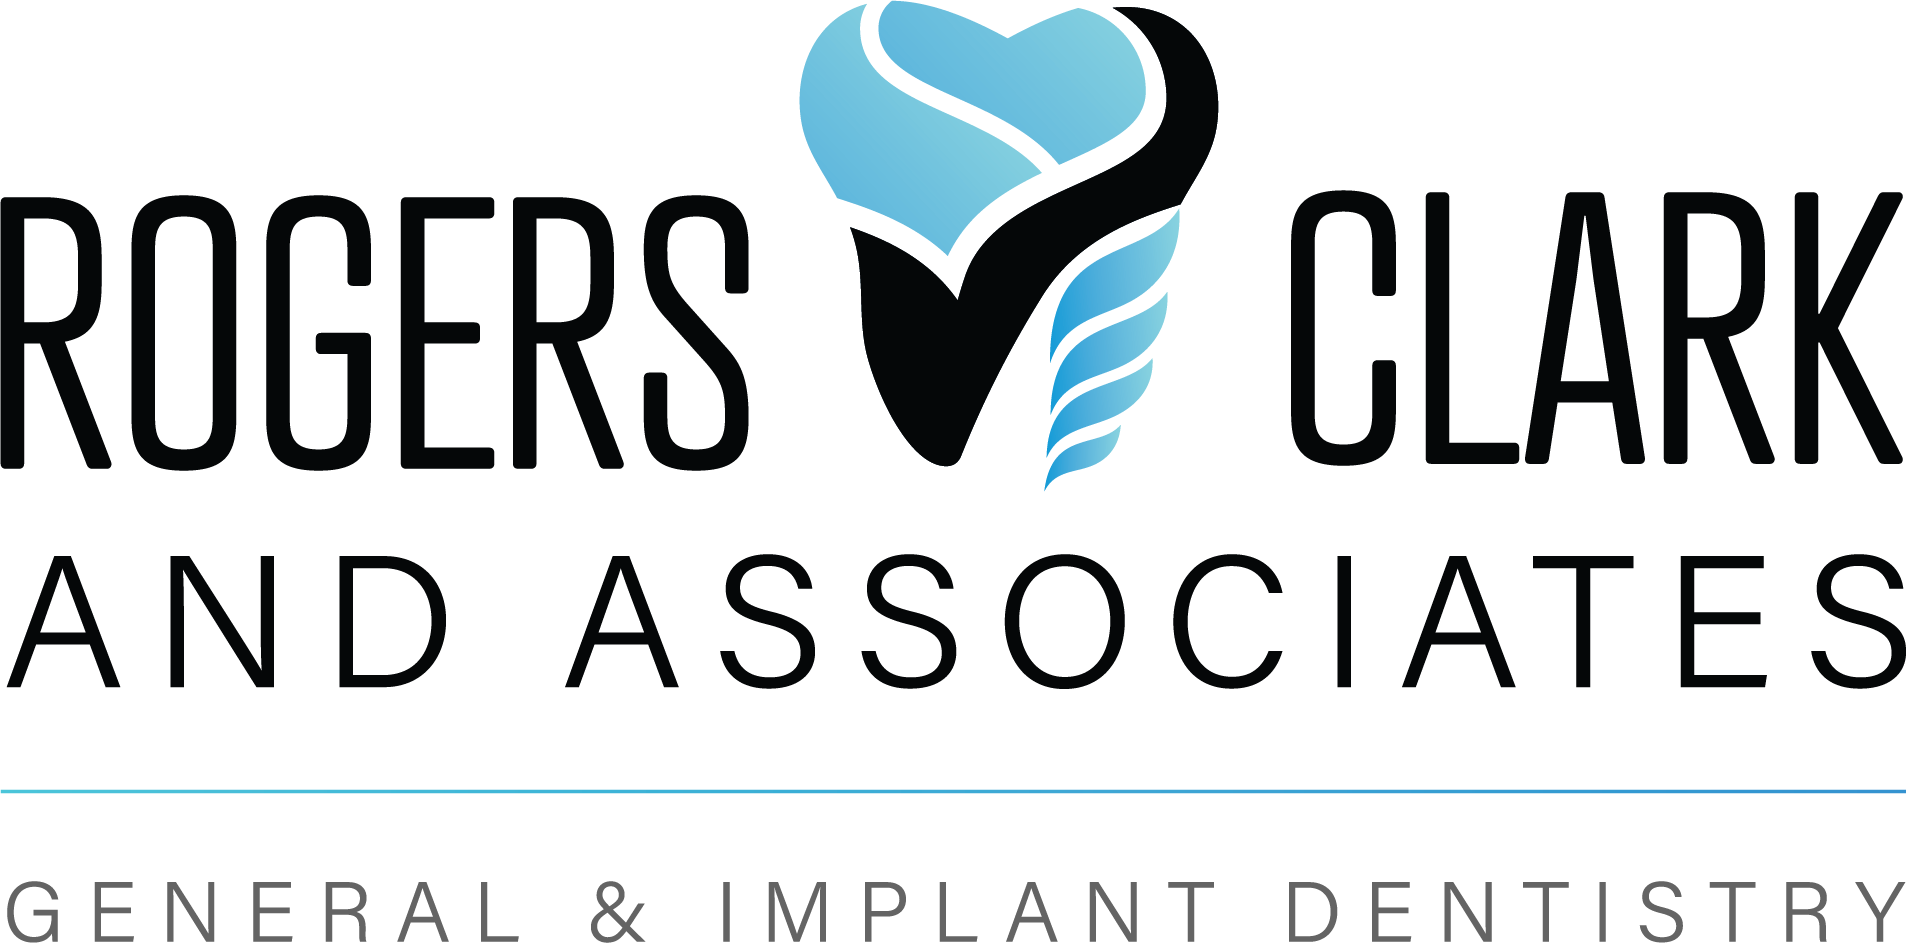 Rogers Clark & Associates Logo